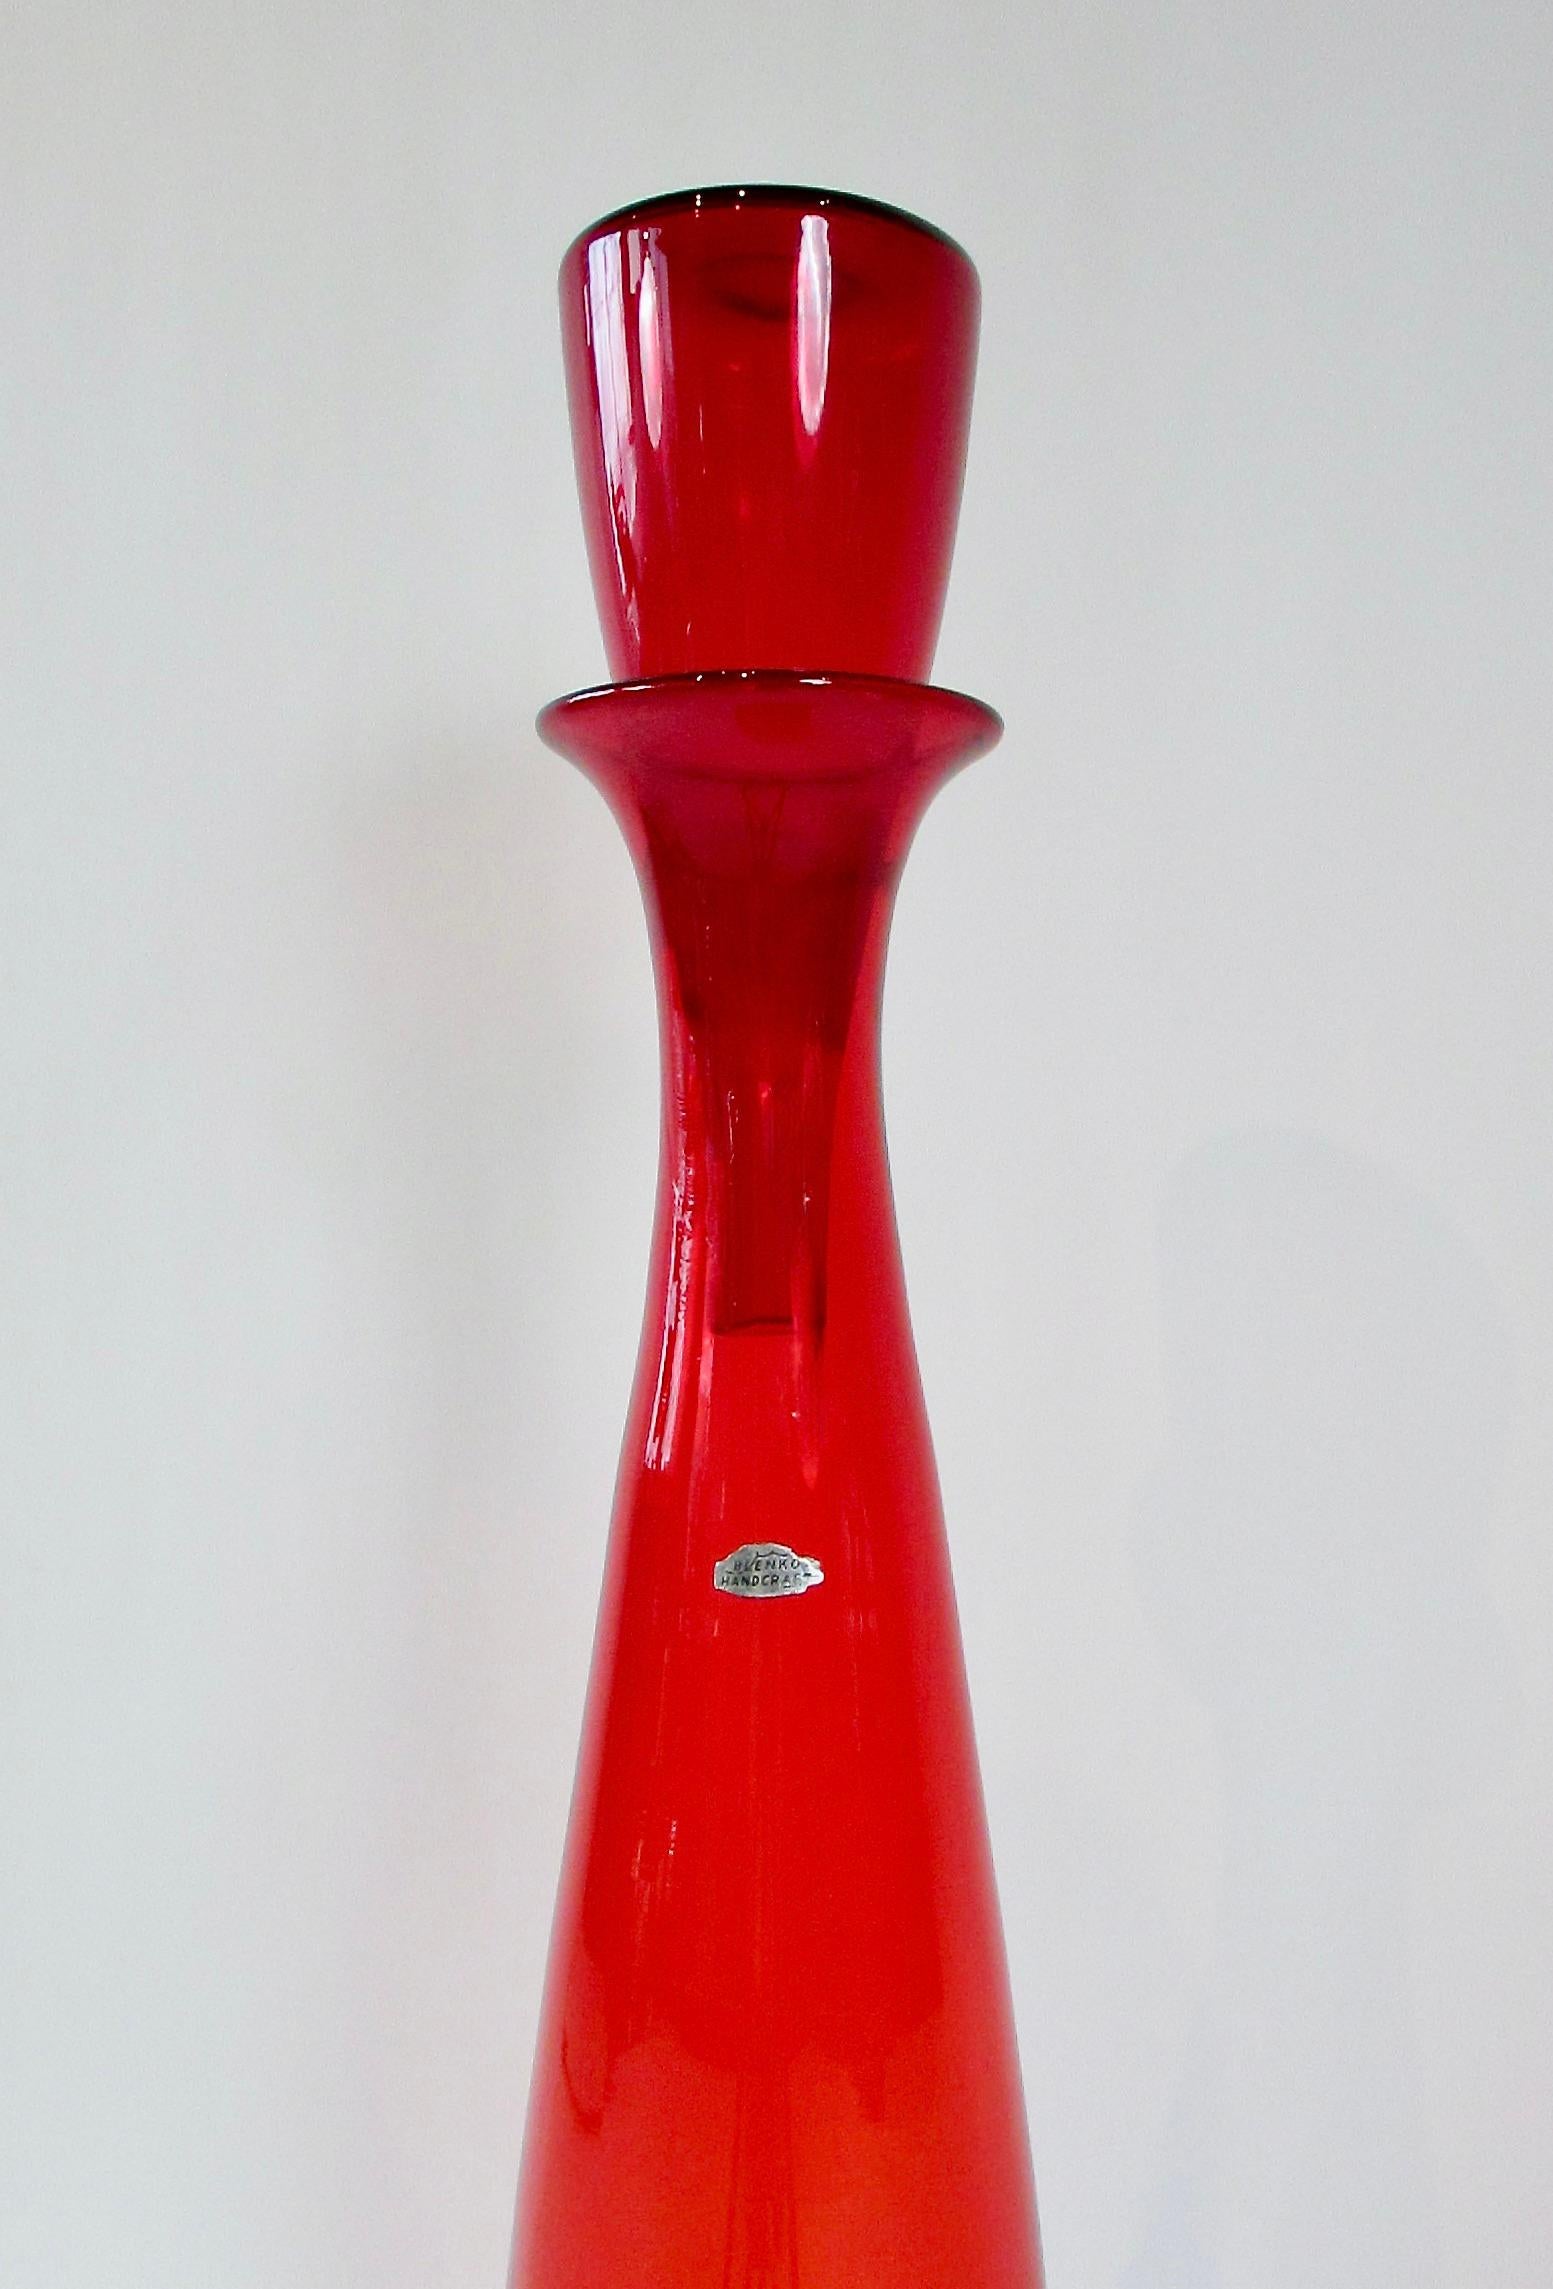 American Tall Bright Red Blenko Glass Floor Vase